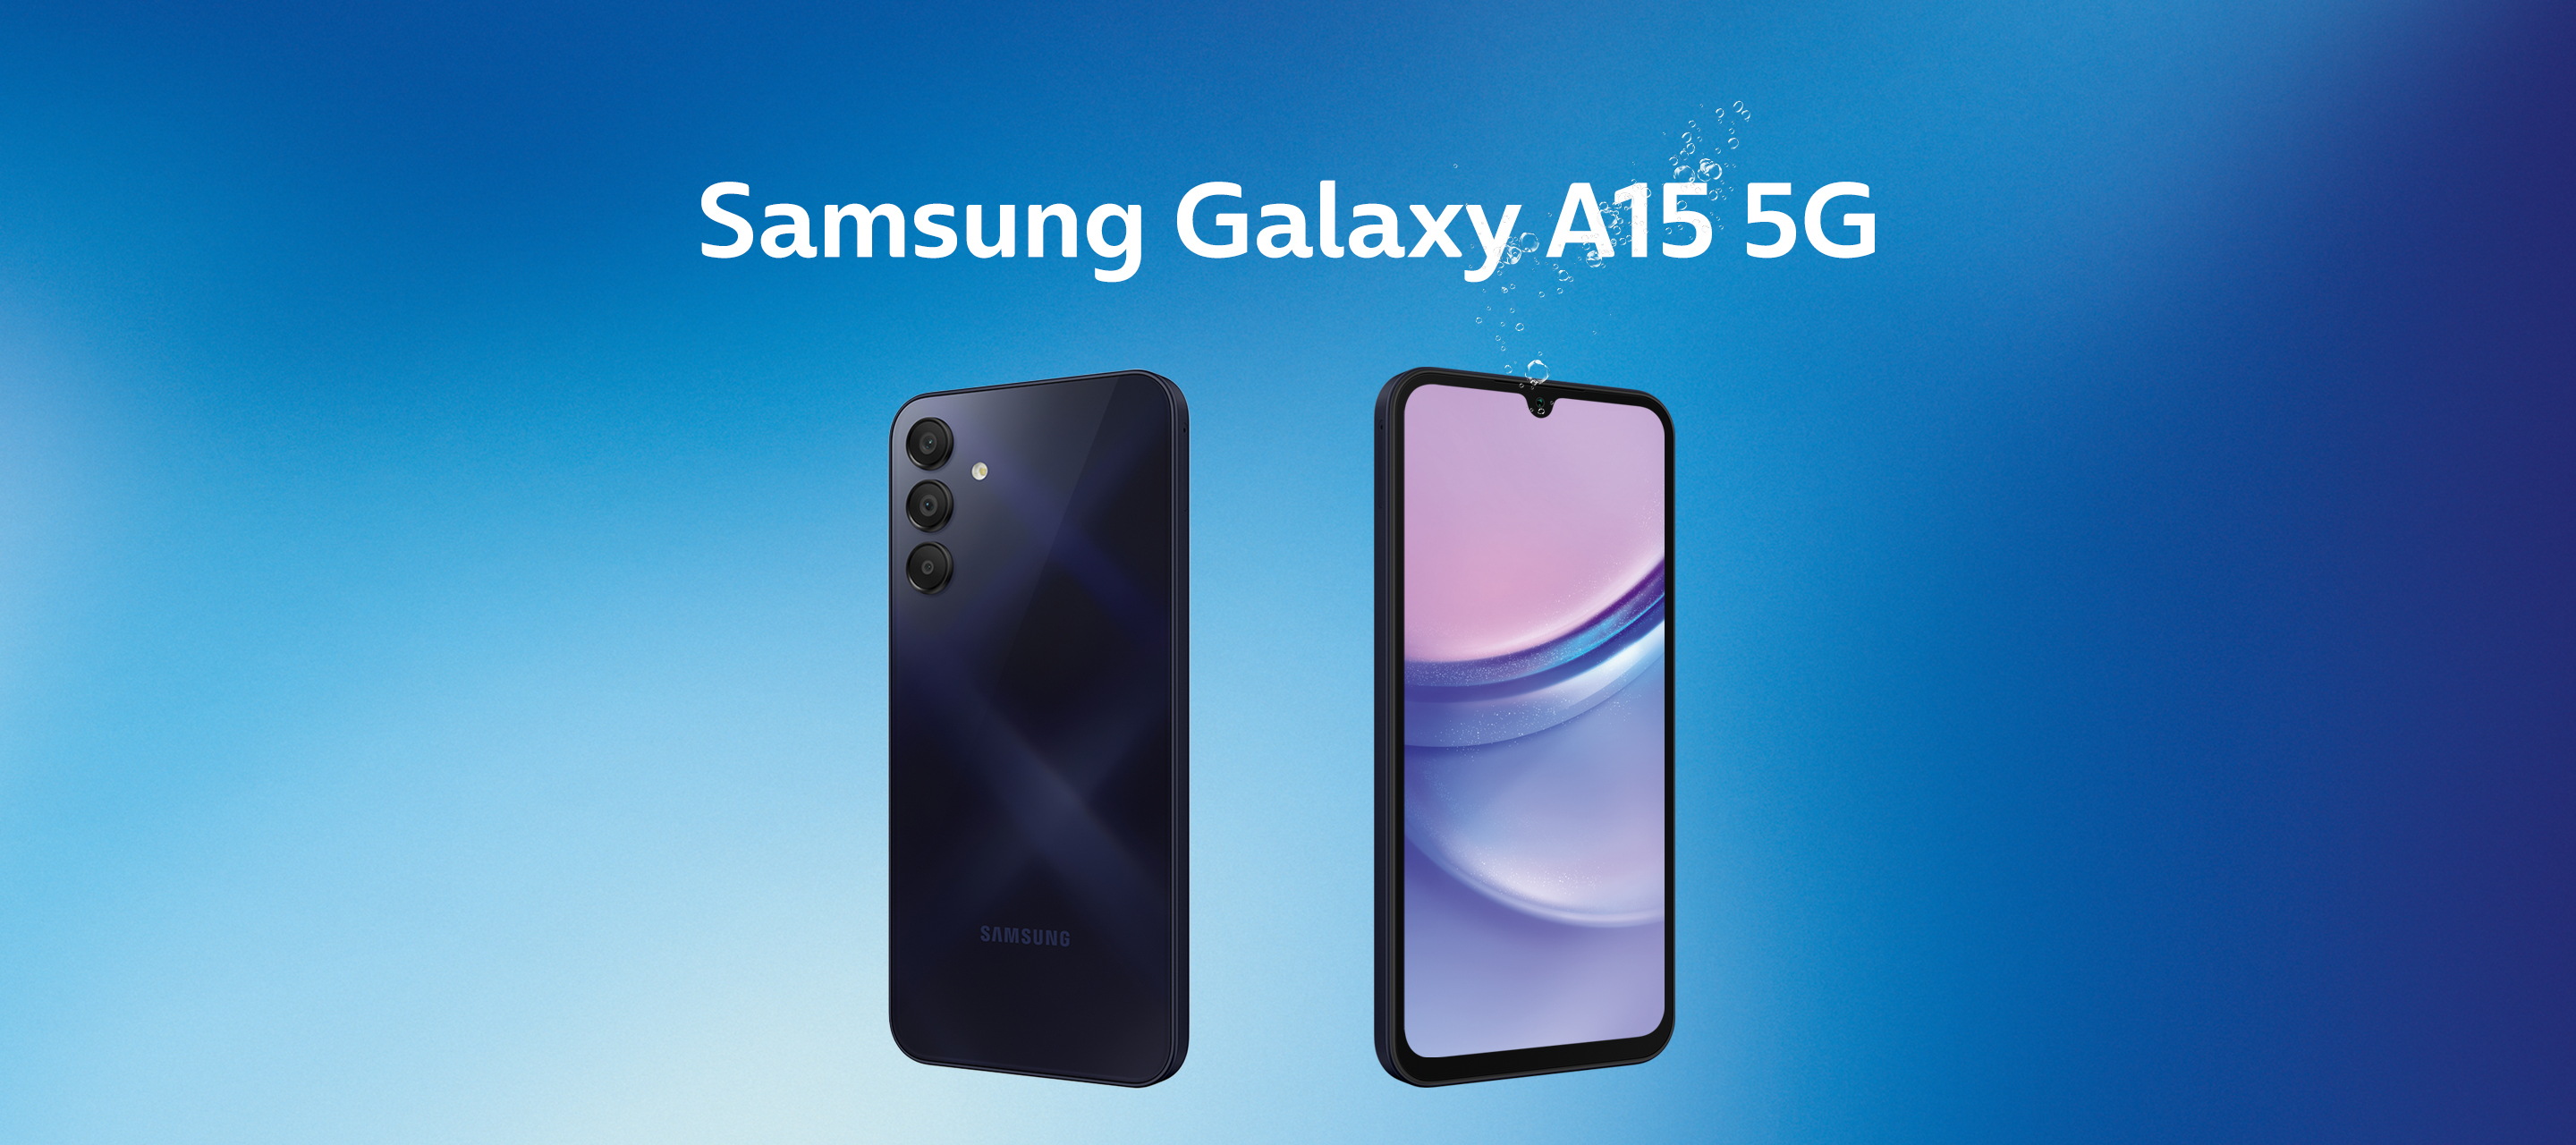 Leistungsstark zum fairen Preis - Das Samsung Galaxy A15 5G bei O₂